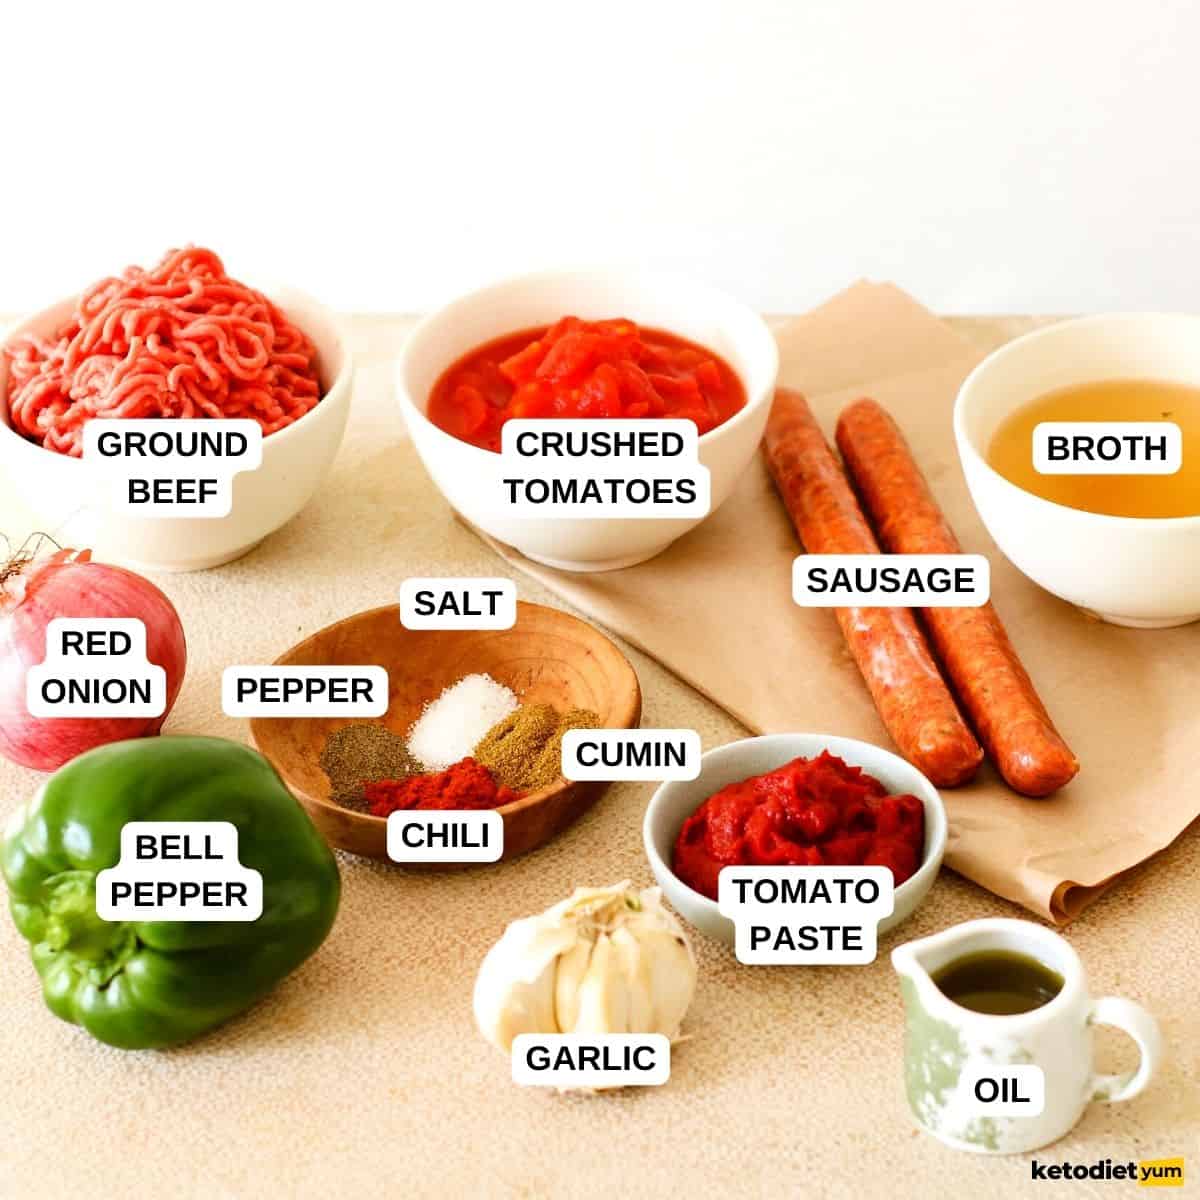 Keto Chili Dogs Ingredients